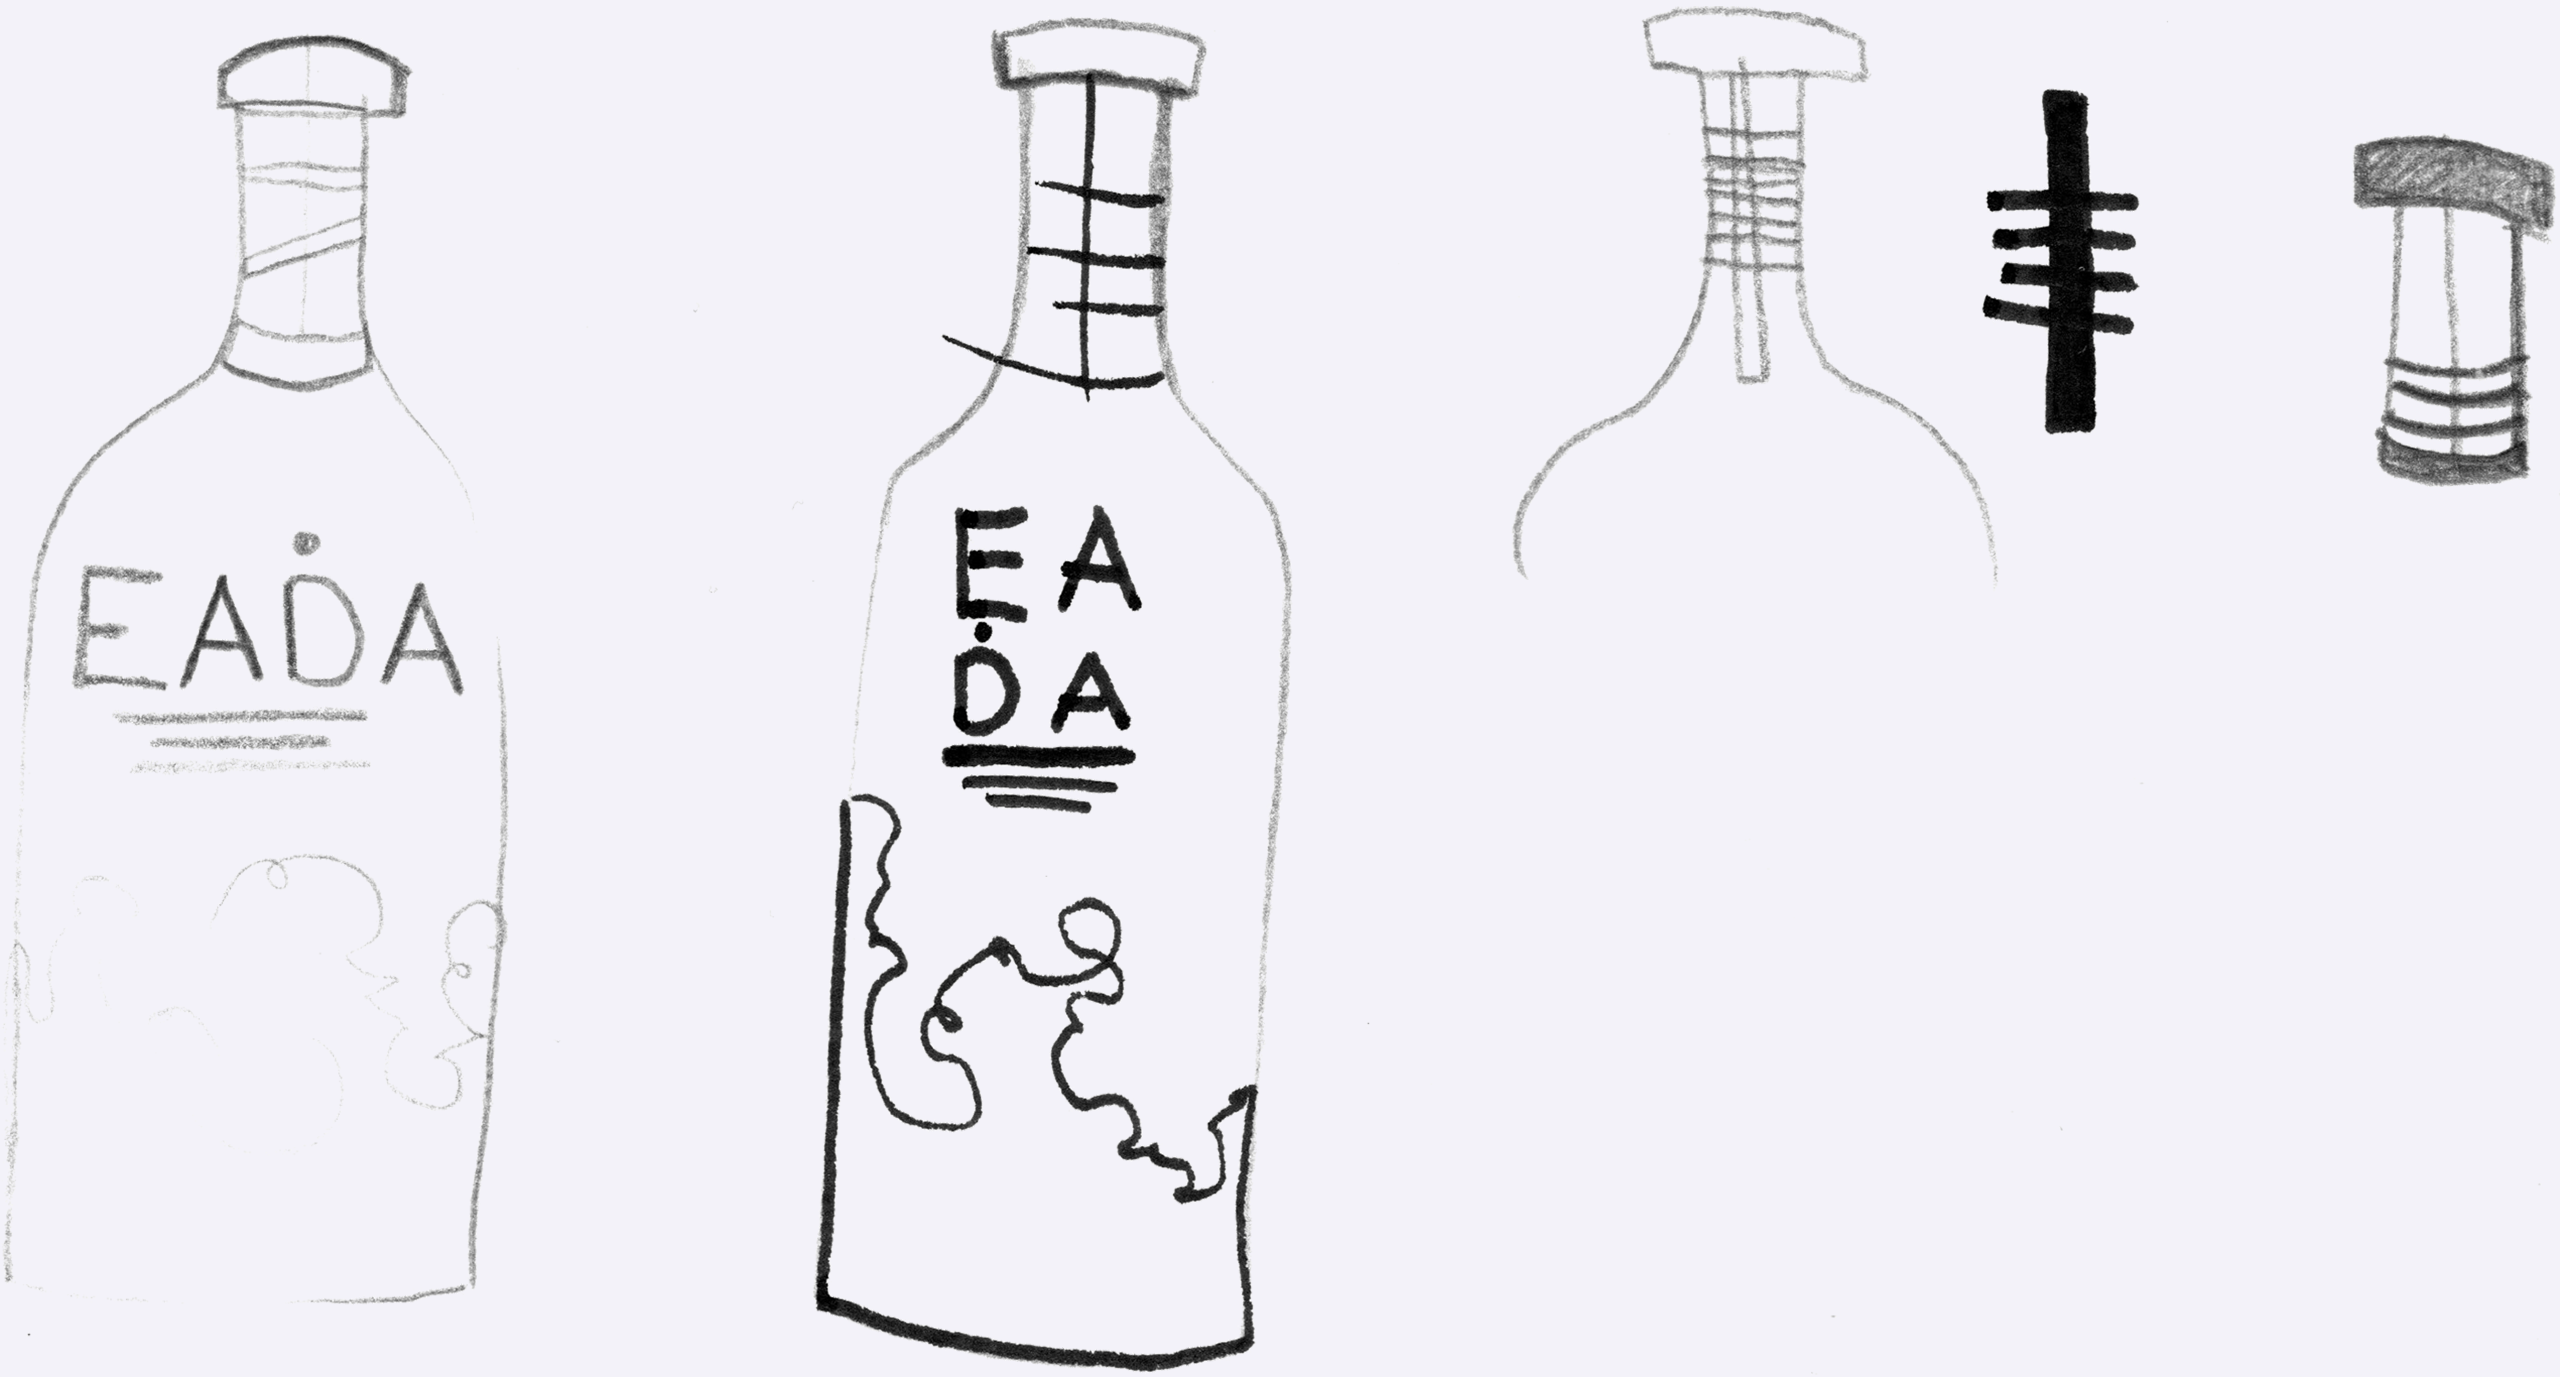 EADA-whiskey-final-packaging-sketches